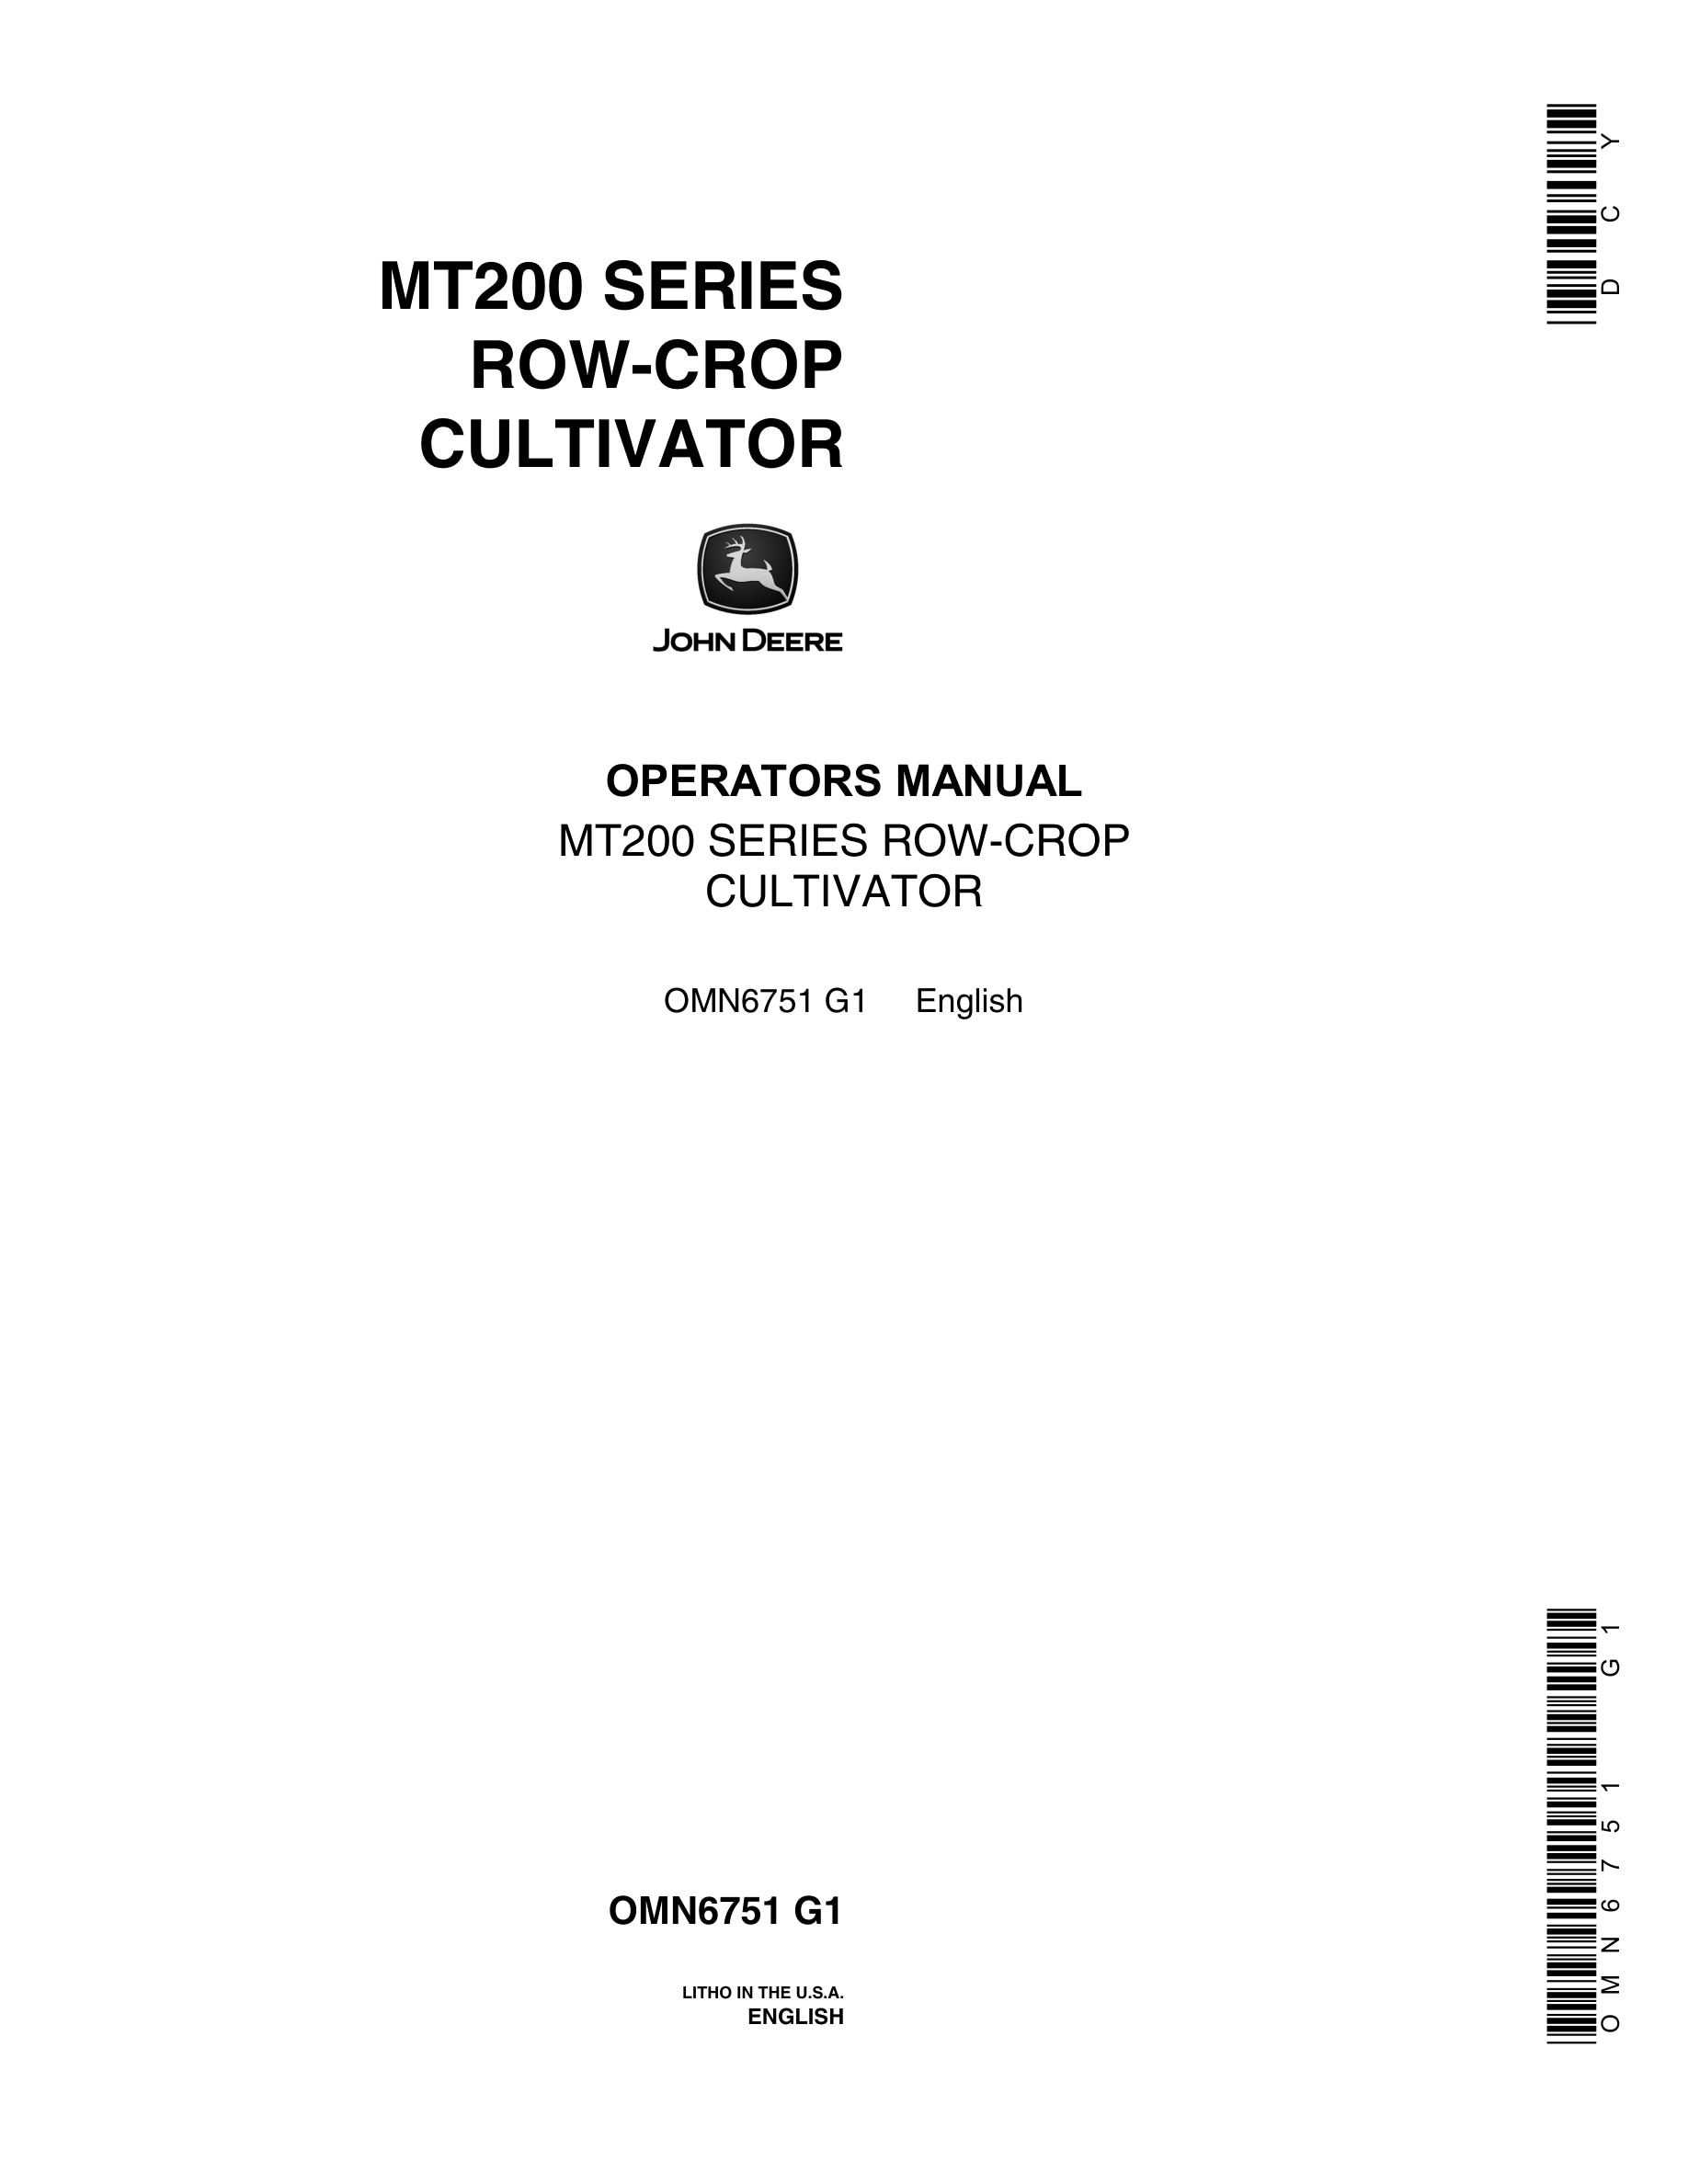 John Deere MT200 SERIES ROW-CROP CULTIVATOR Operator Manual OMN6751-1